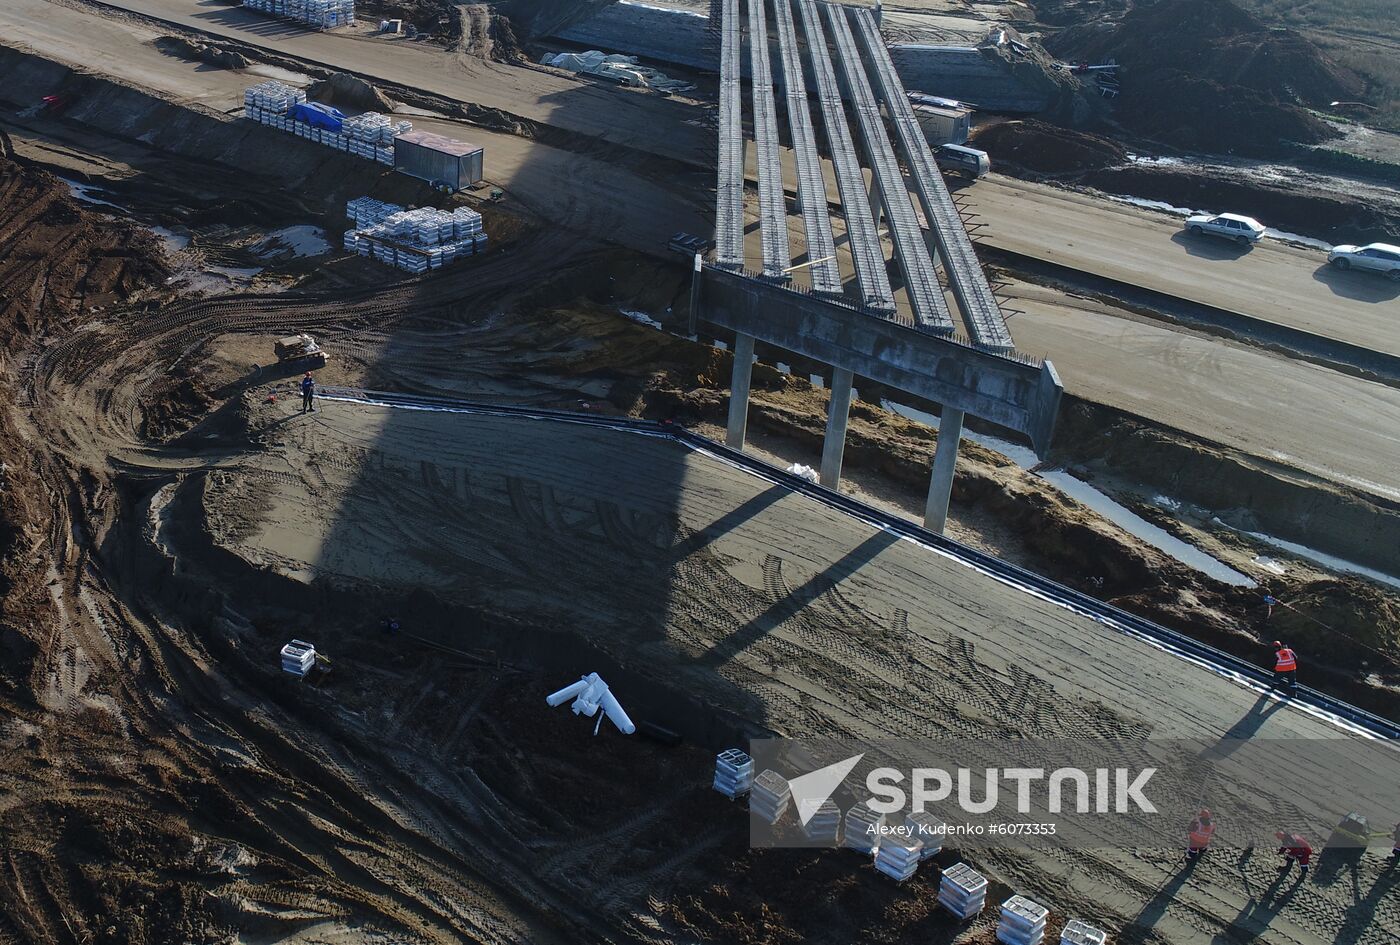 Russia Road Construction